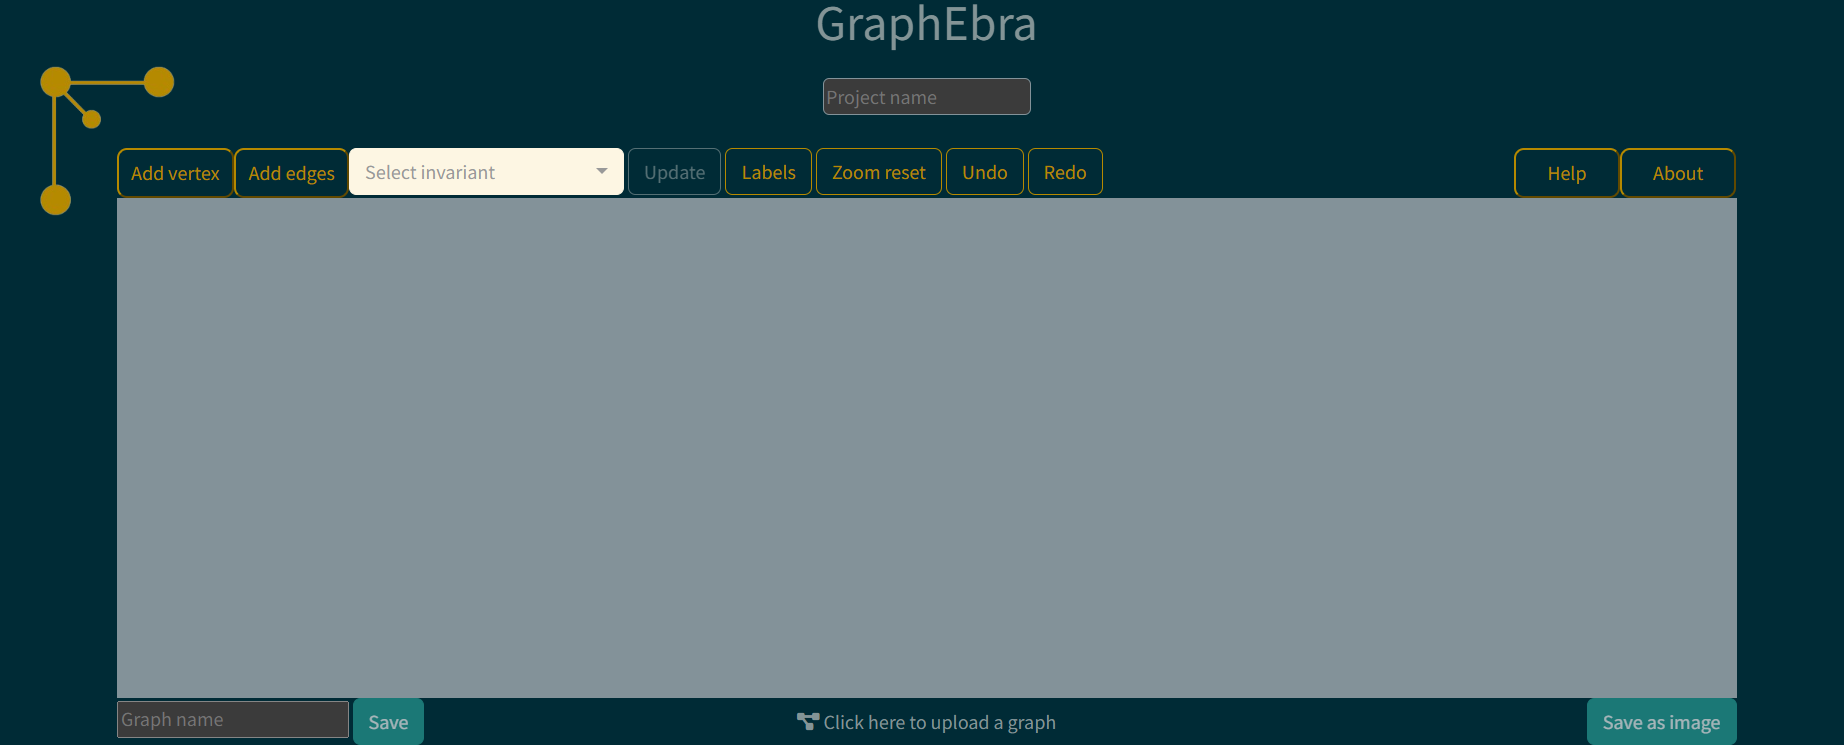 GraphEbra